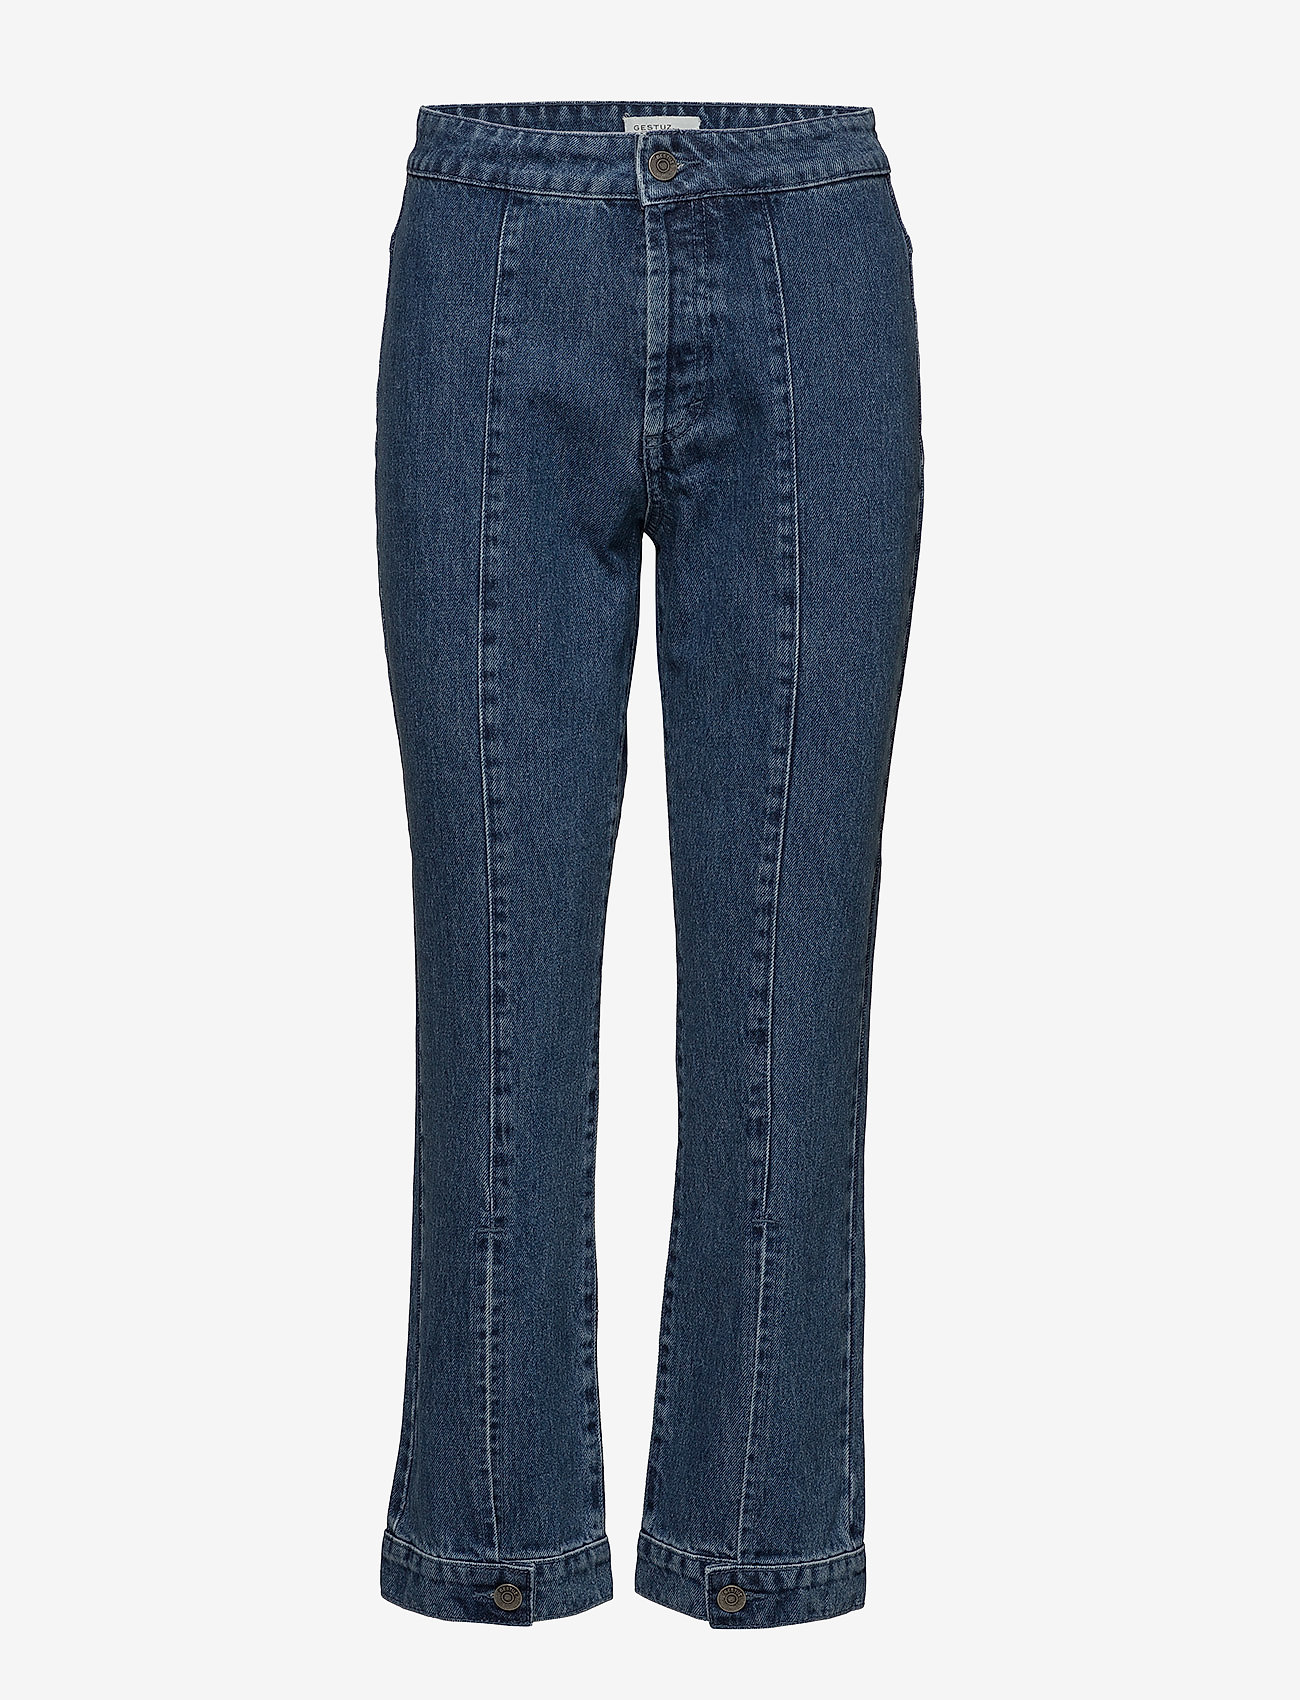 Gestuz - Rubyn jeans MS18 - flared jeans - carolina blue - 0